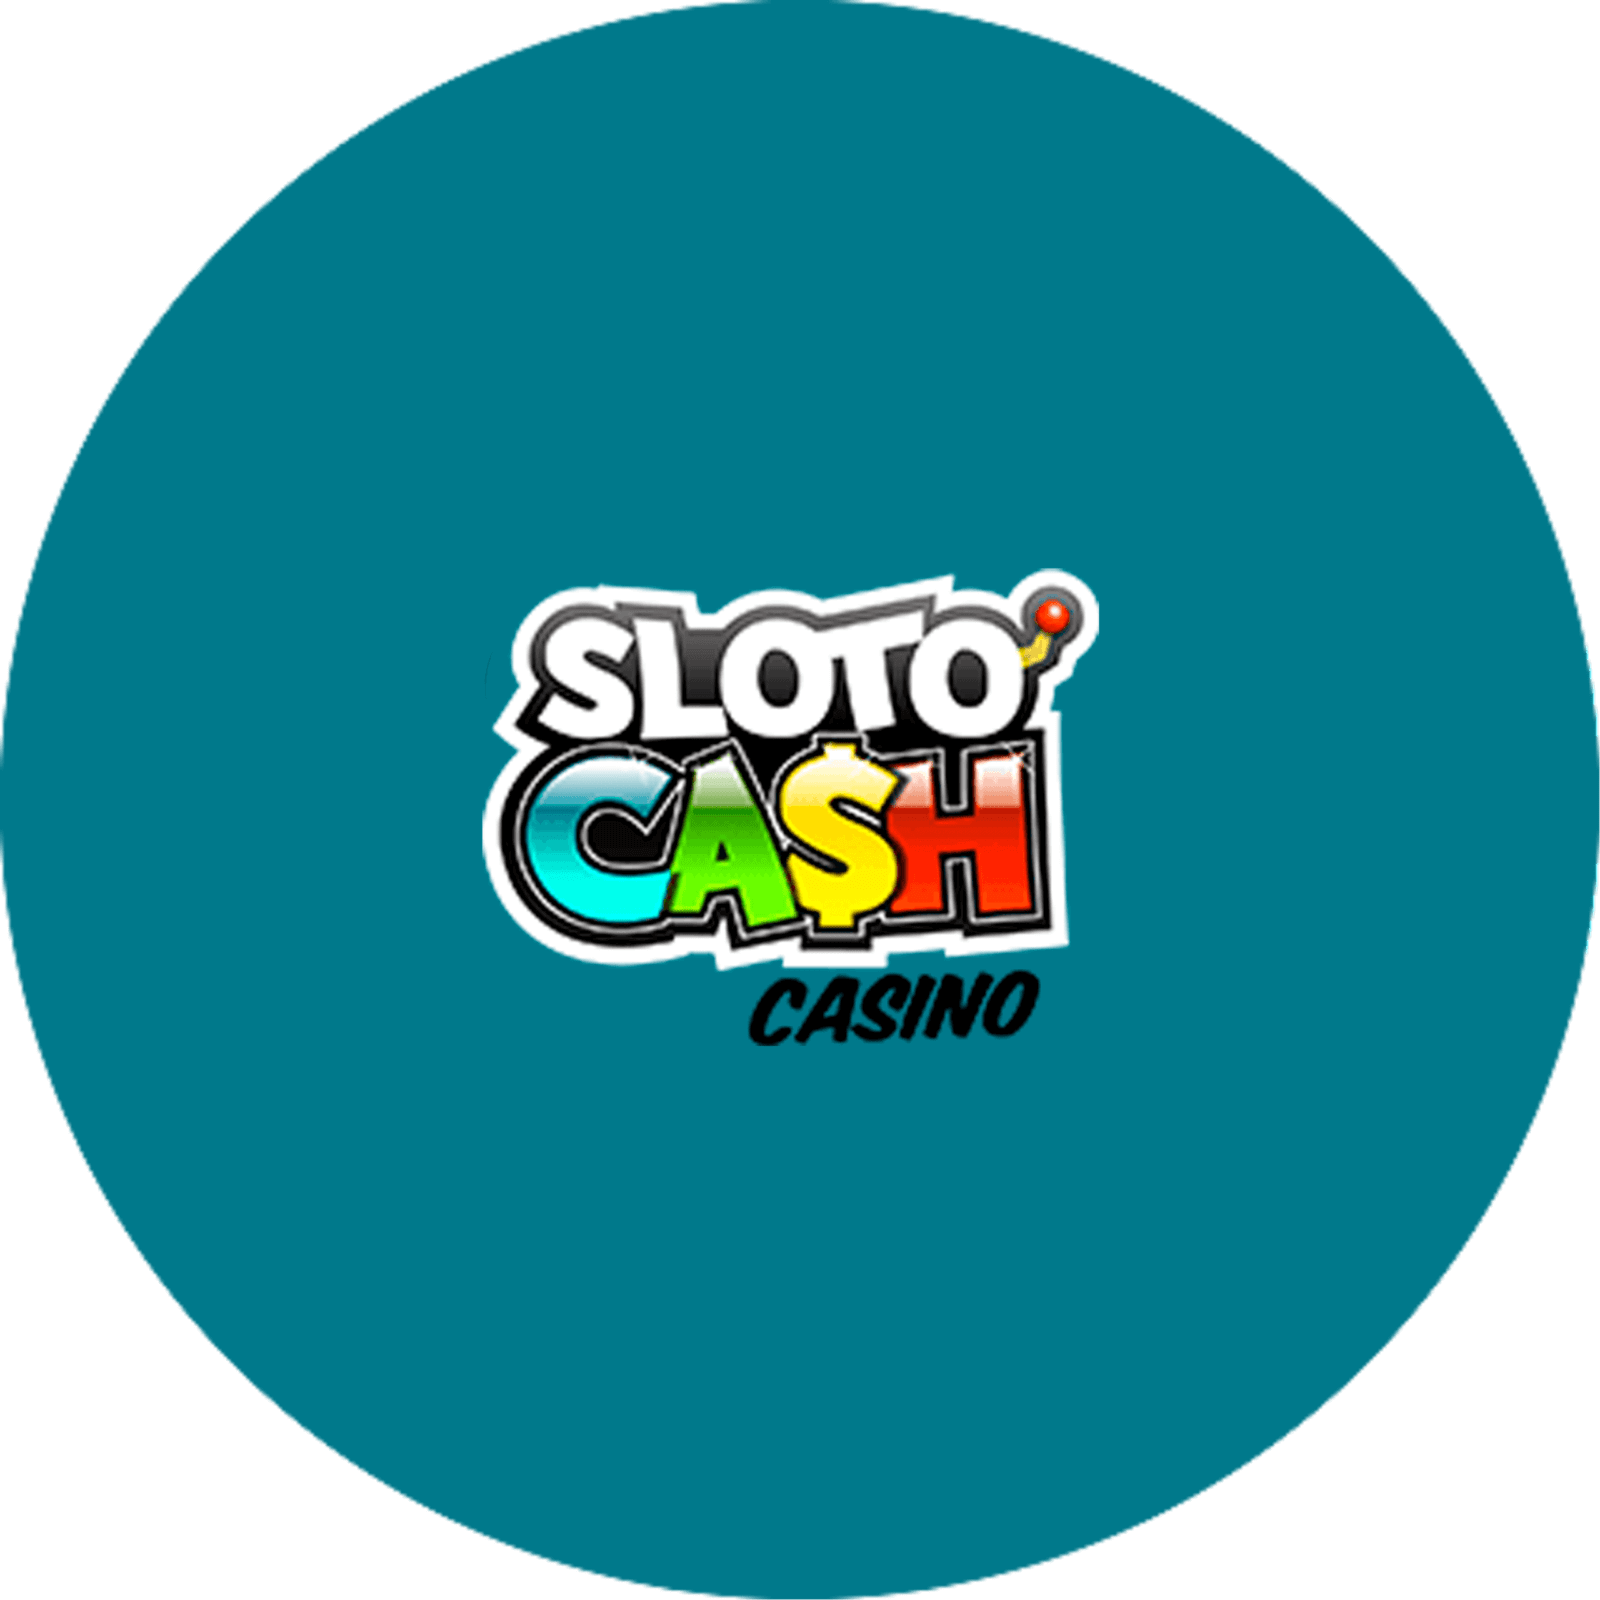 100 Free Spins at SlotoCash Casino